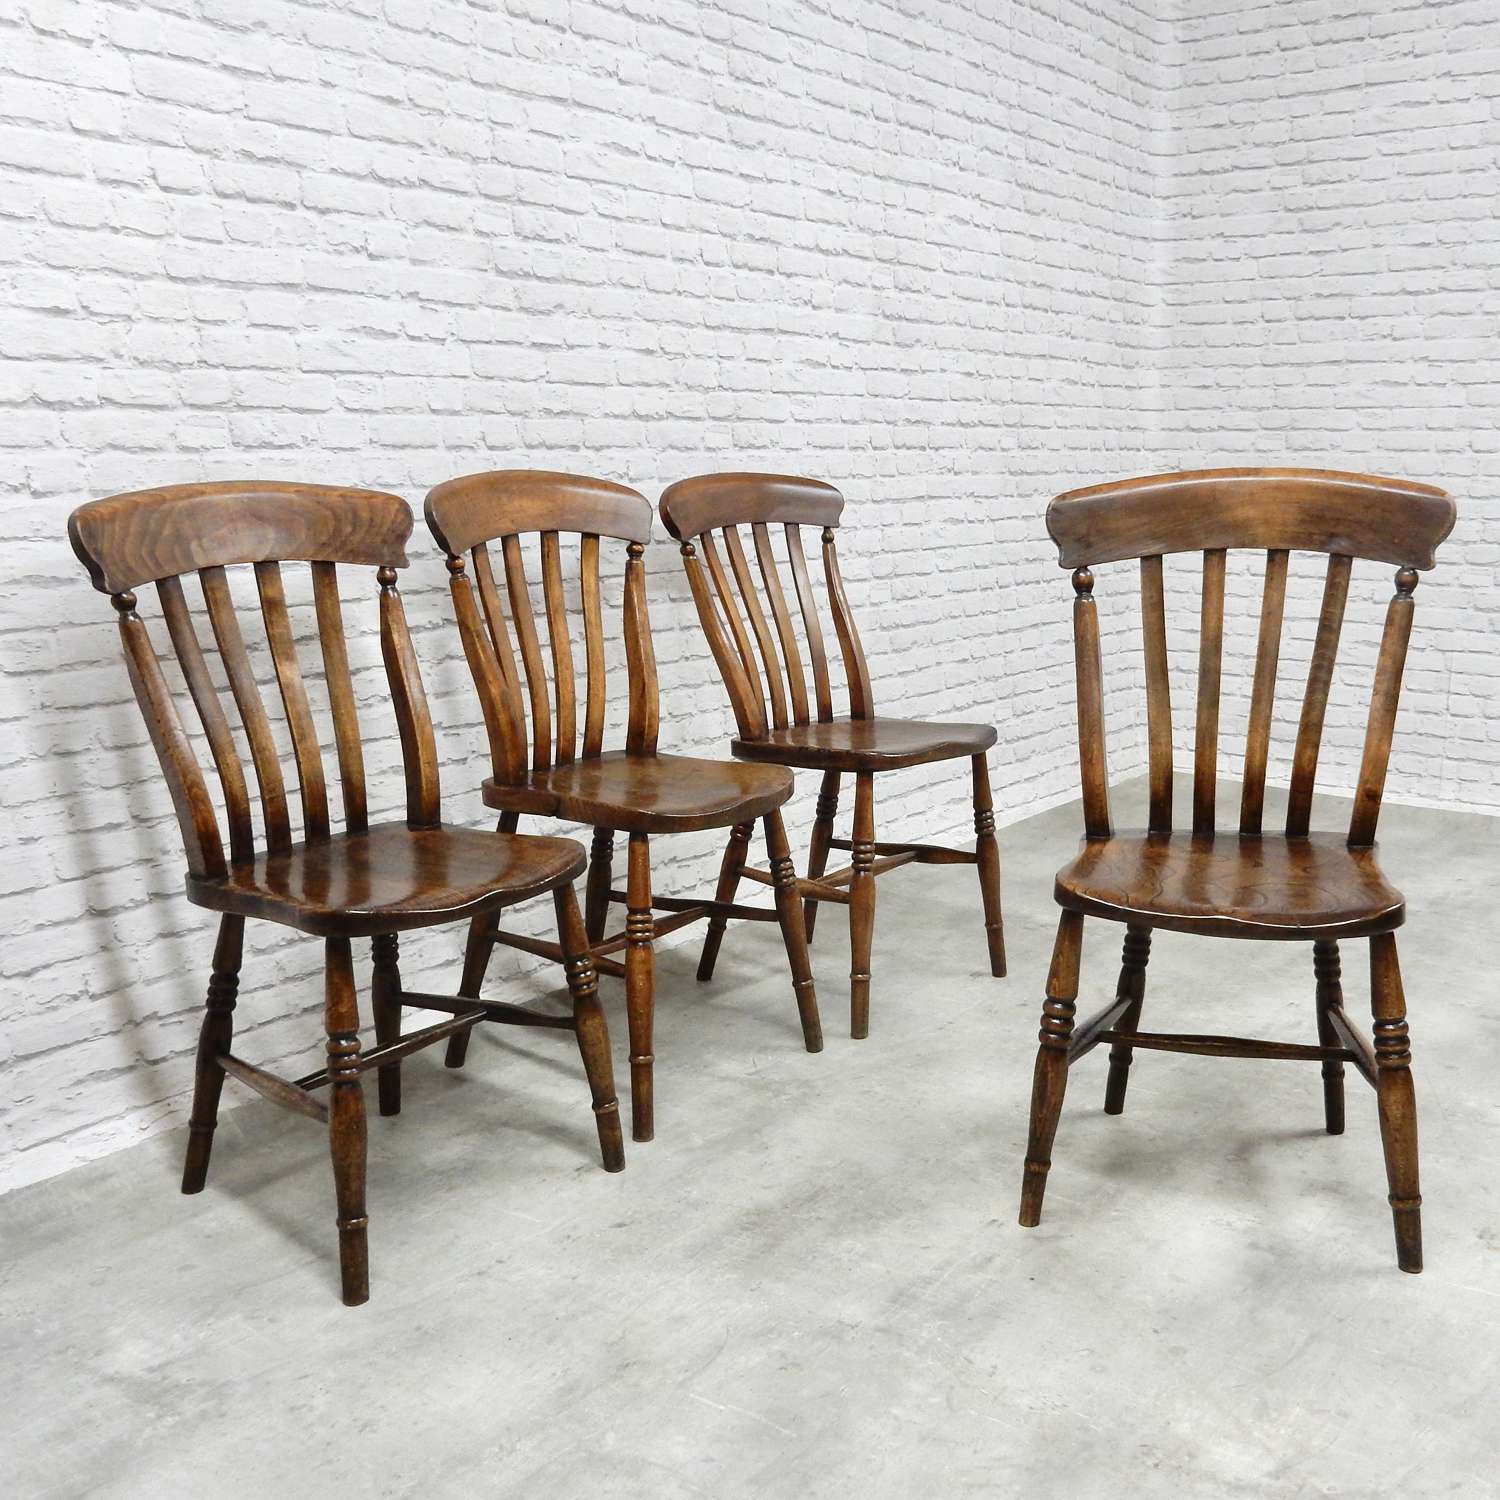 4x Windsor Kitchen Chairs